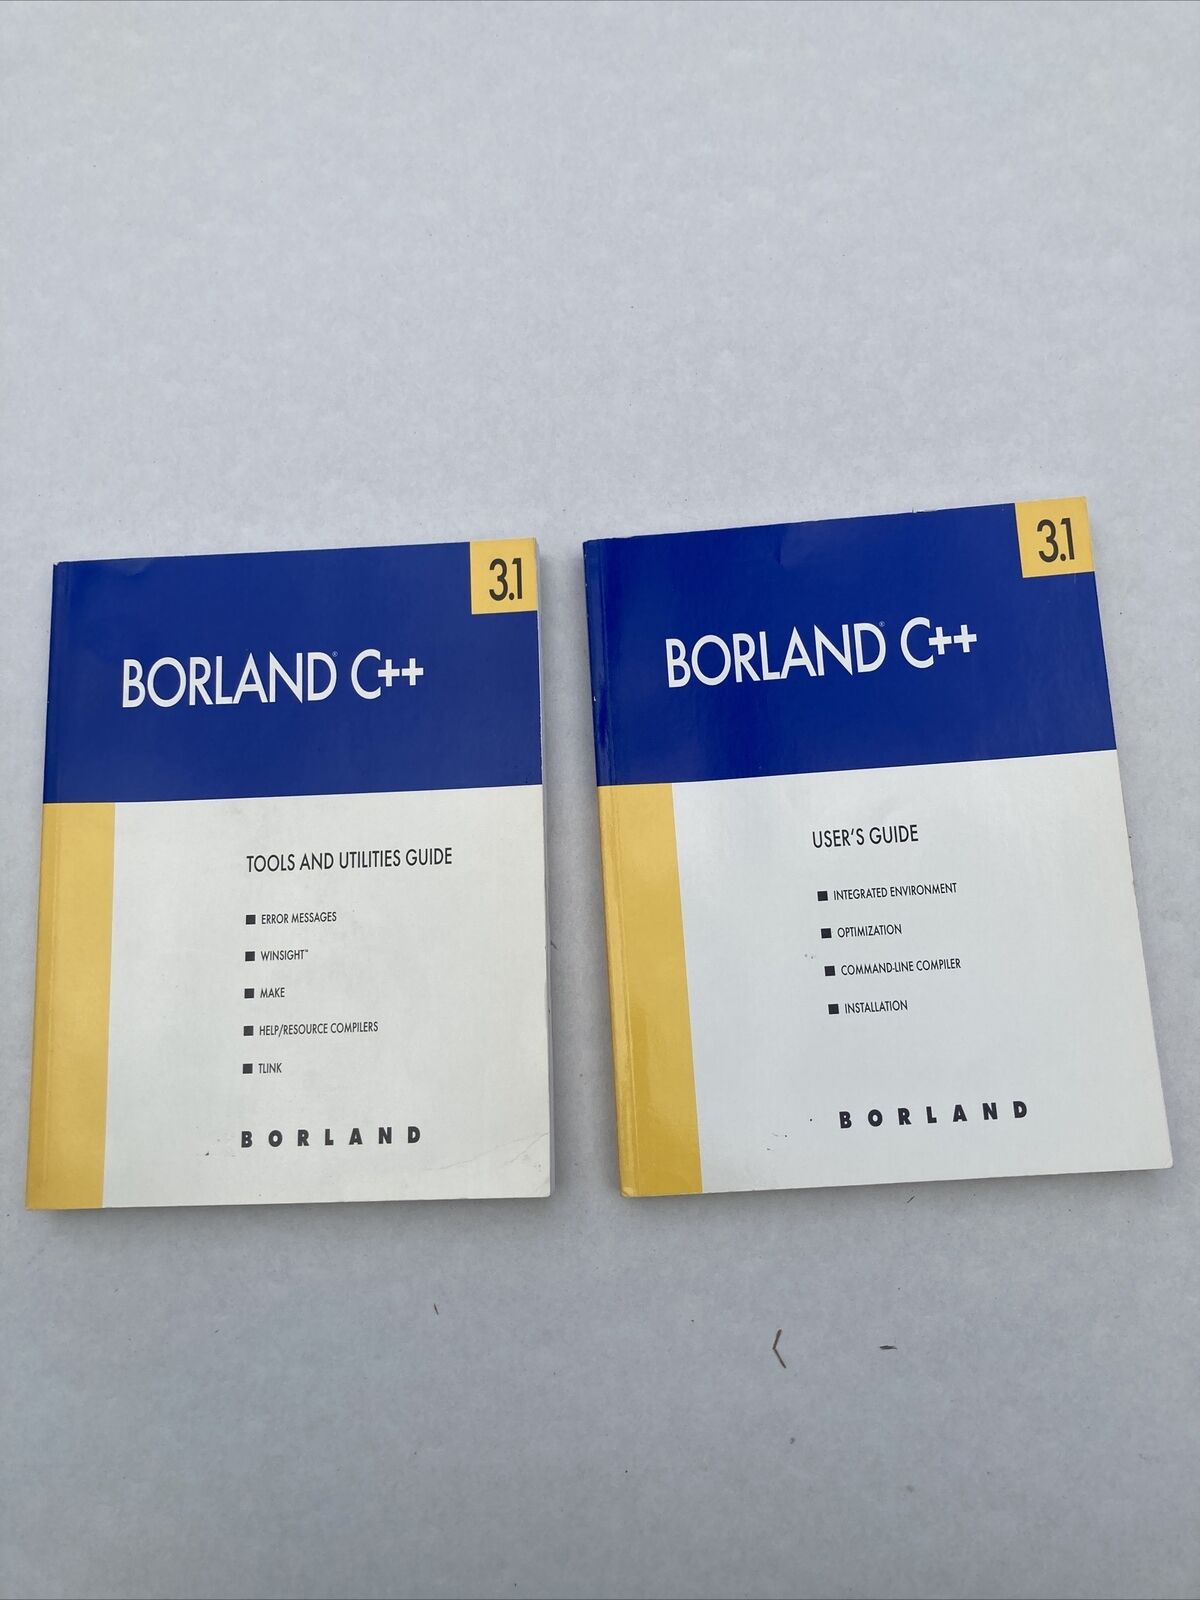 Borland C++ V3.1 Manuals